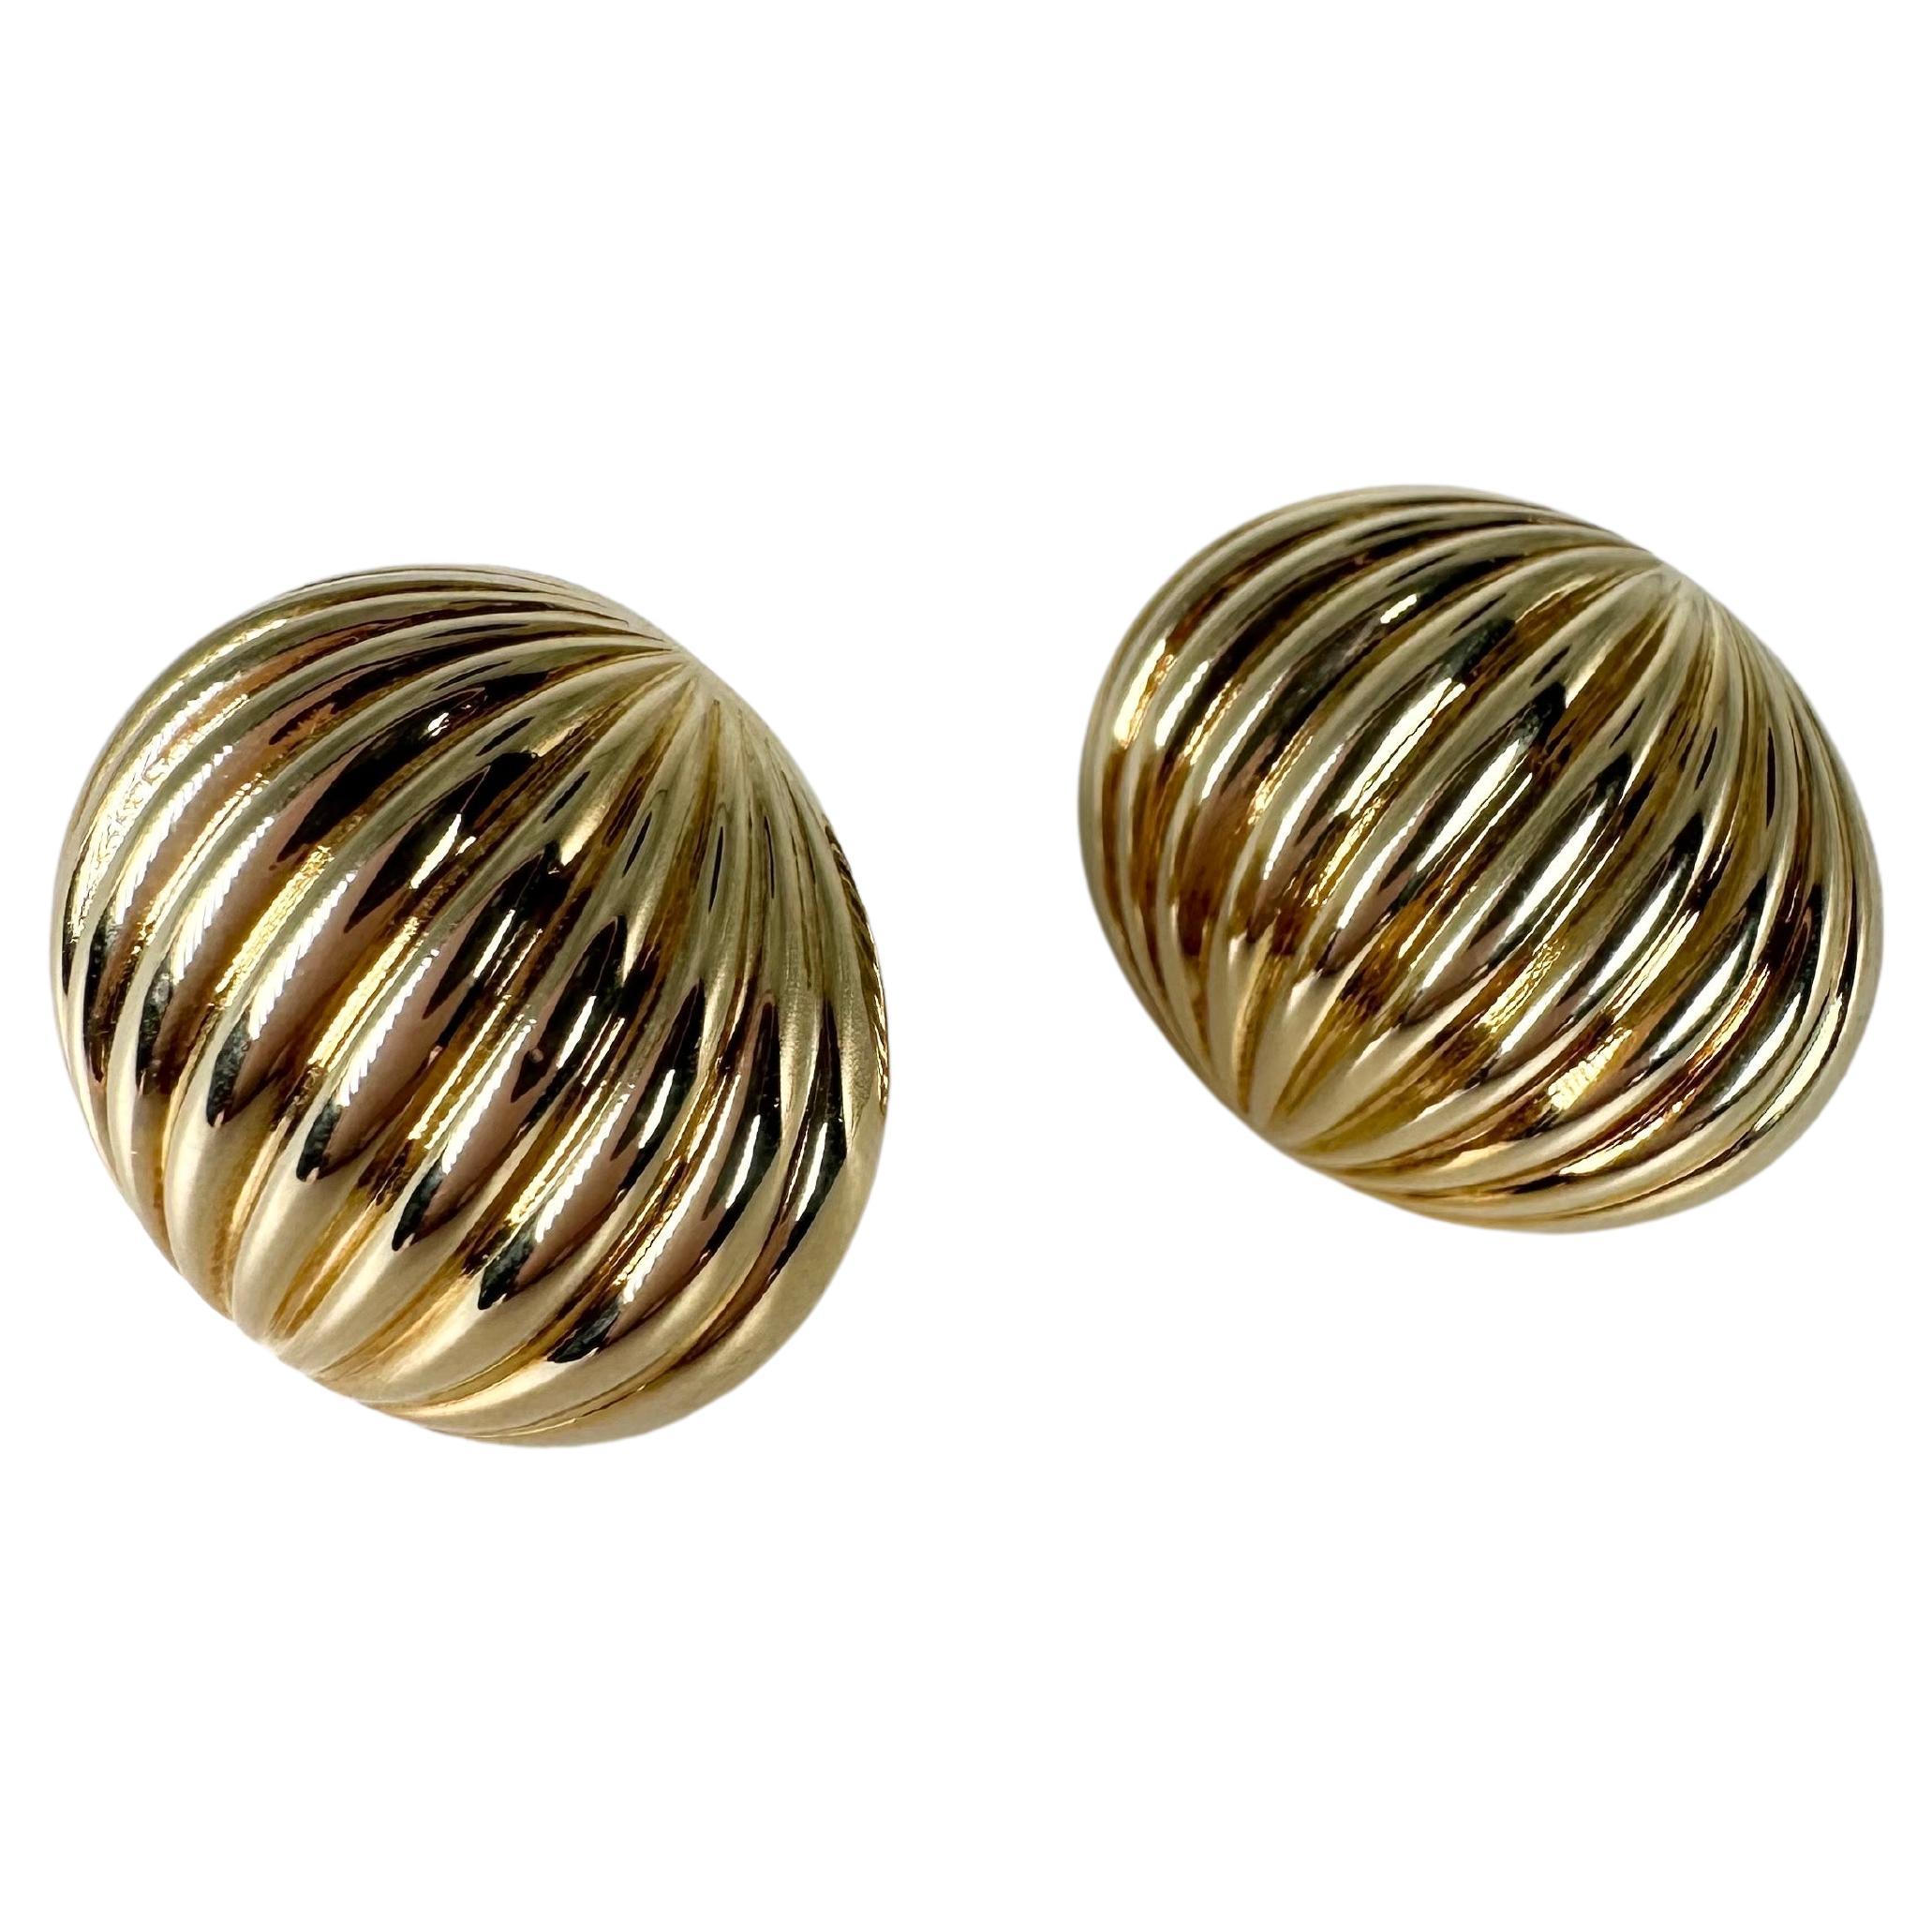 Shell gold earrings 18KT yellow gold earrings omega clip earrings